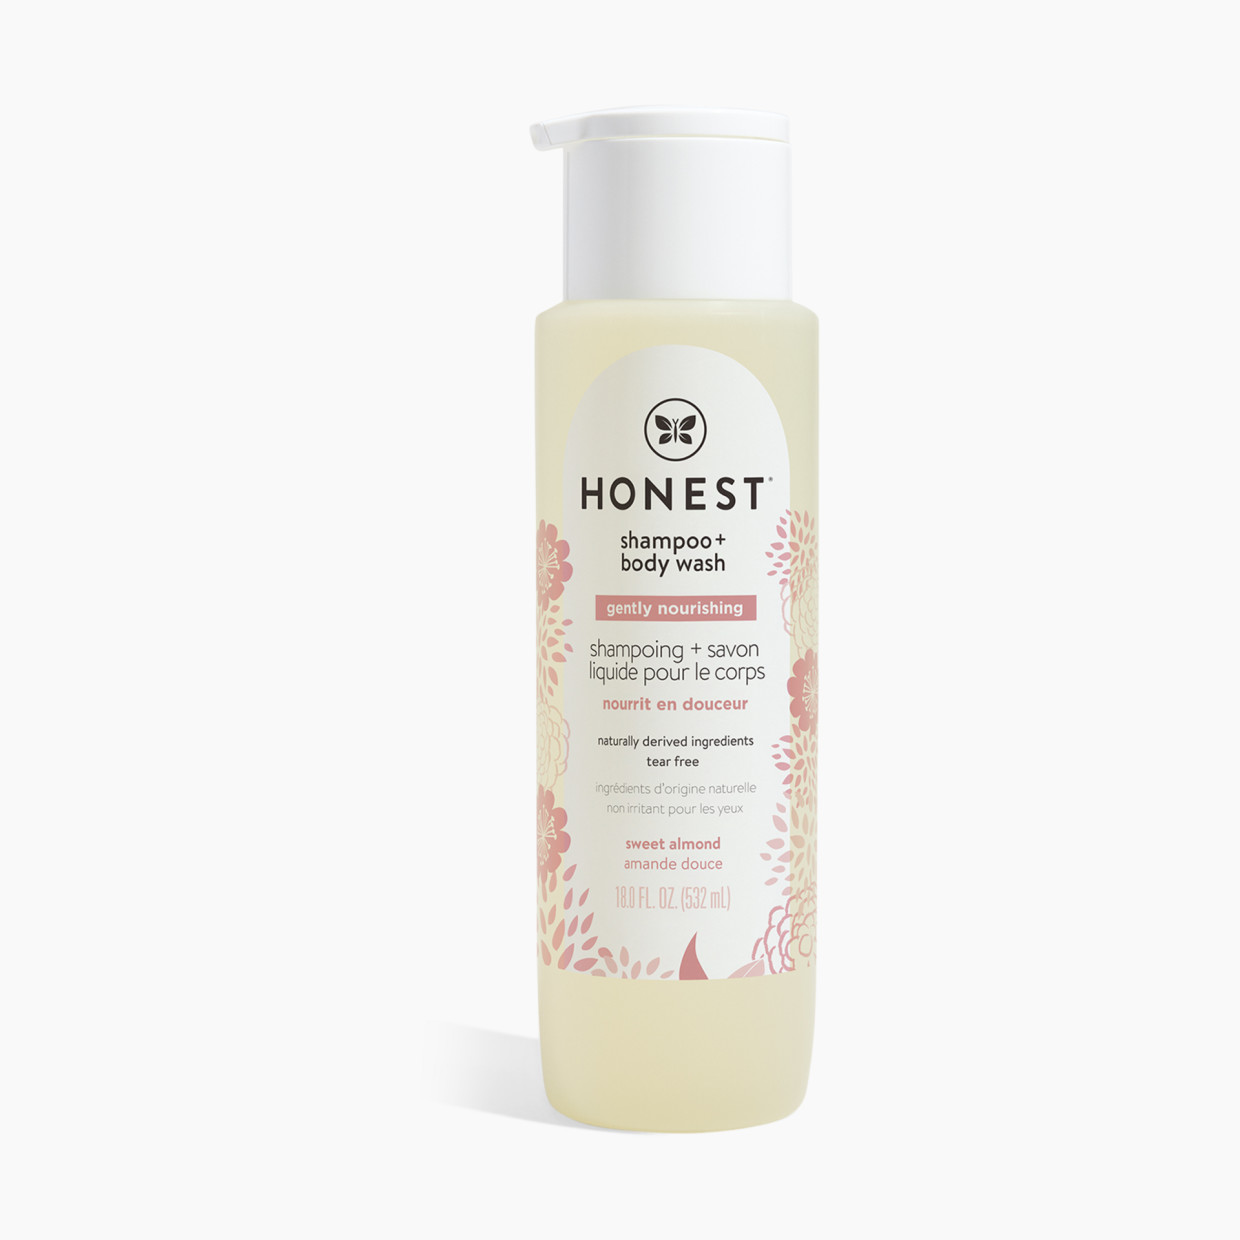 The Honest Company Shampoo & Body Wash - Sweet Almond, 18oz.